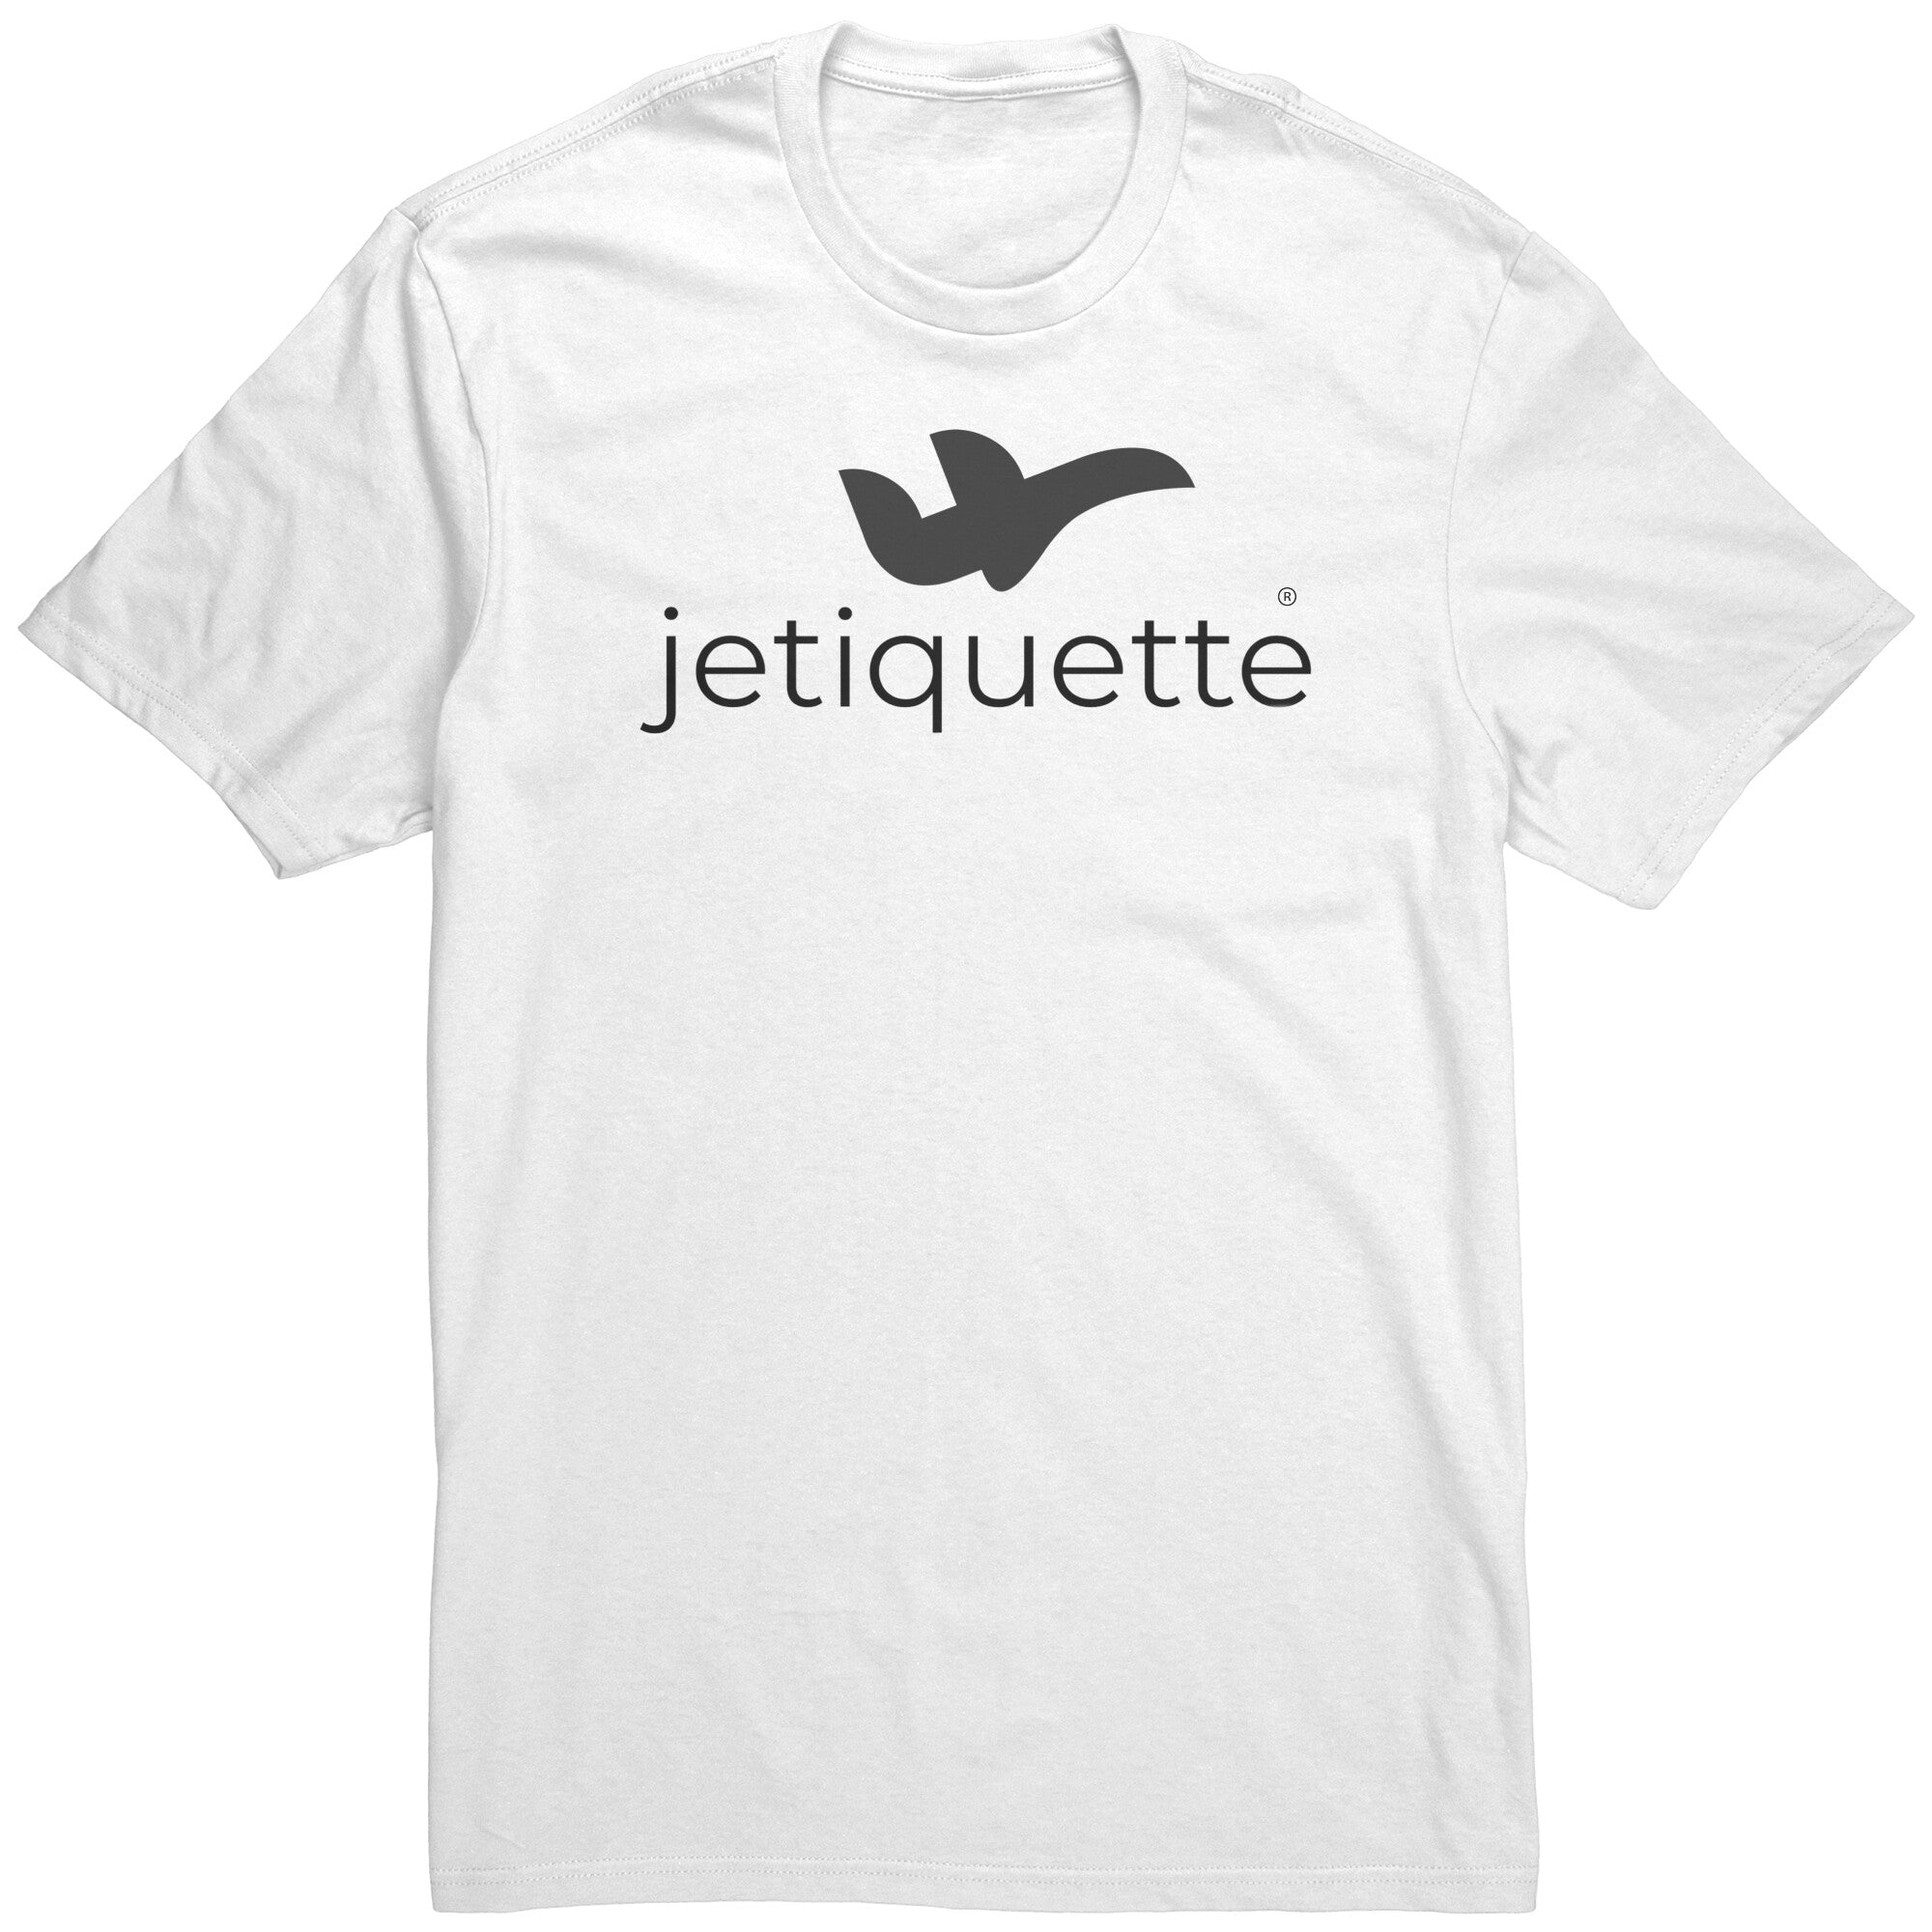 Jetiquette T-Shirt (White)